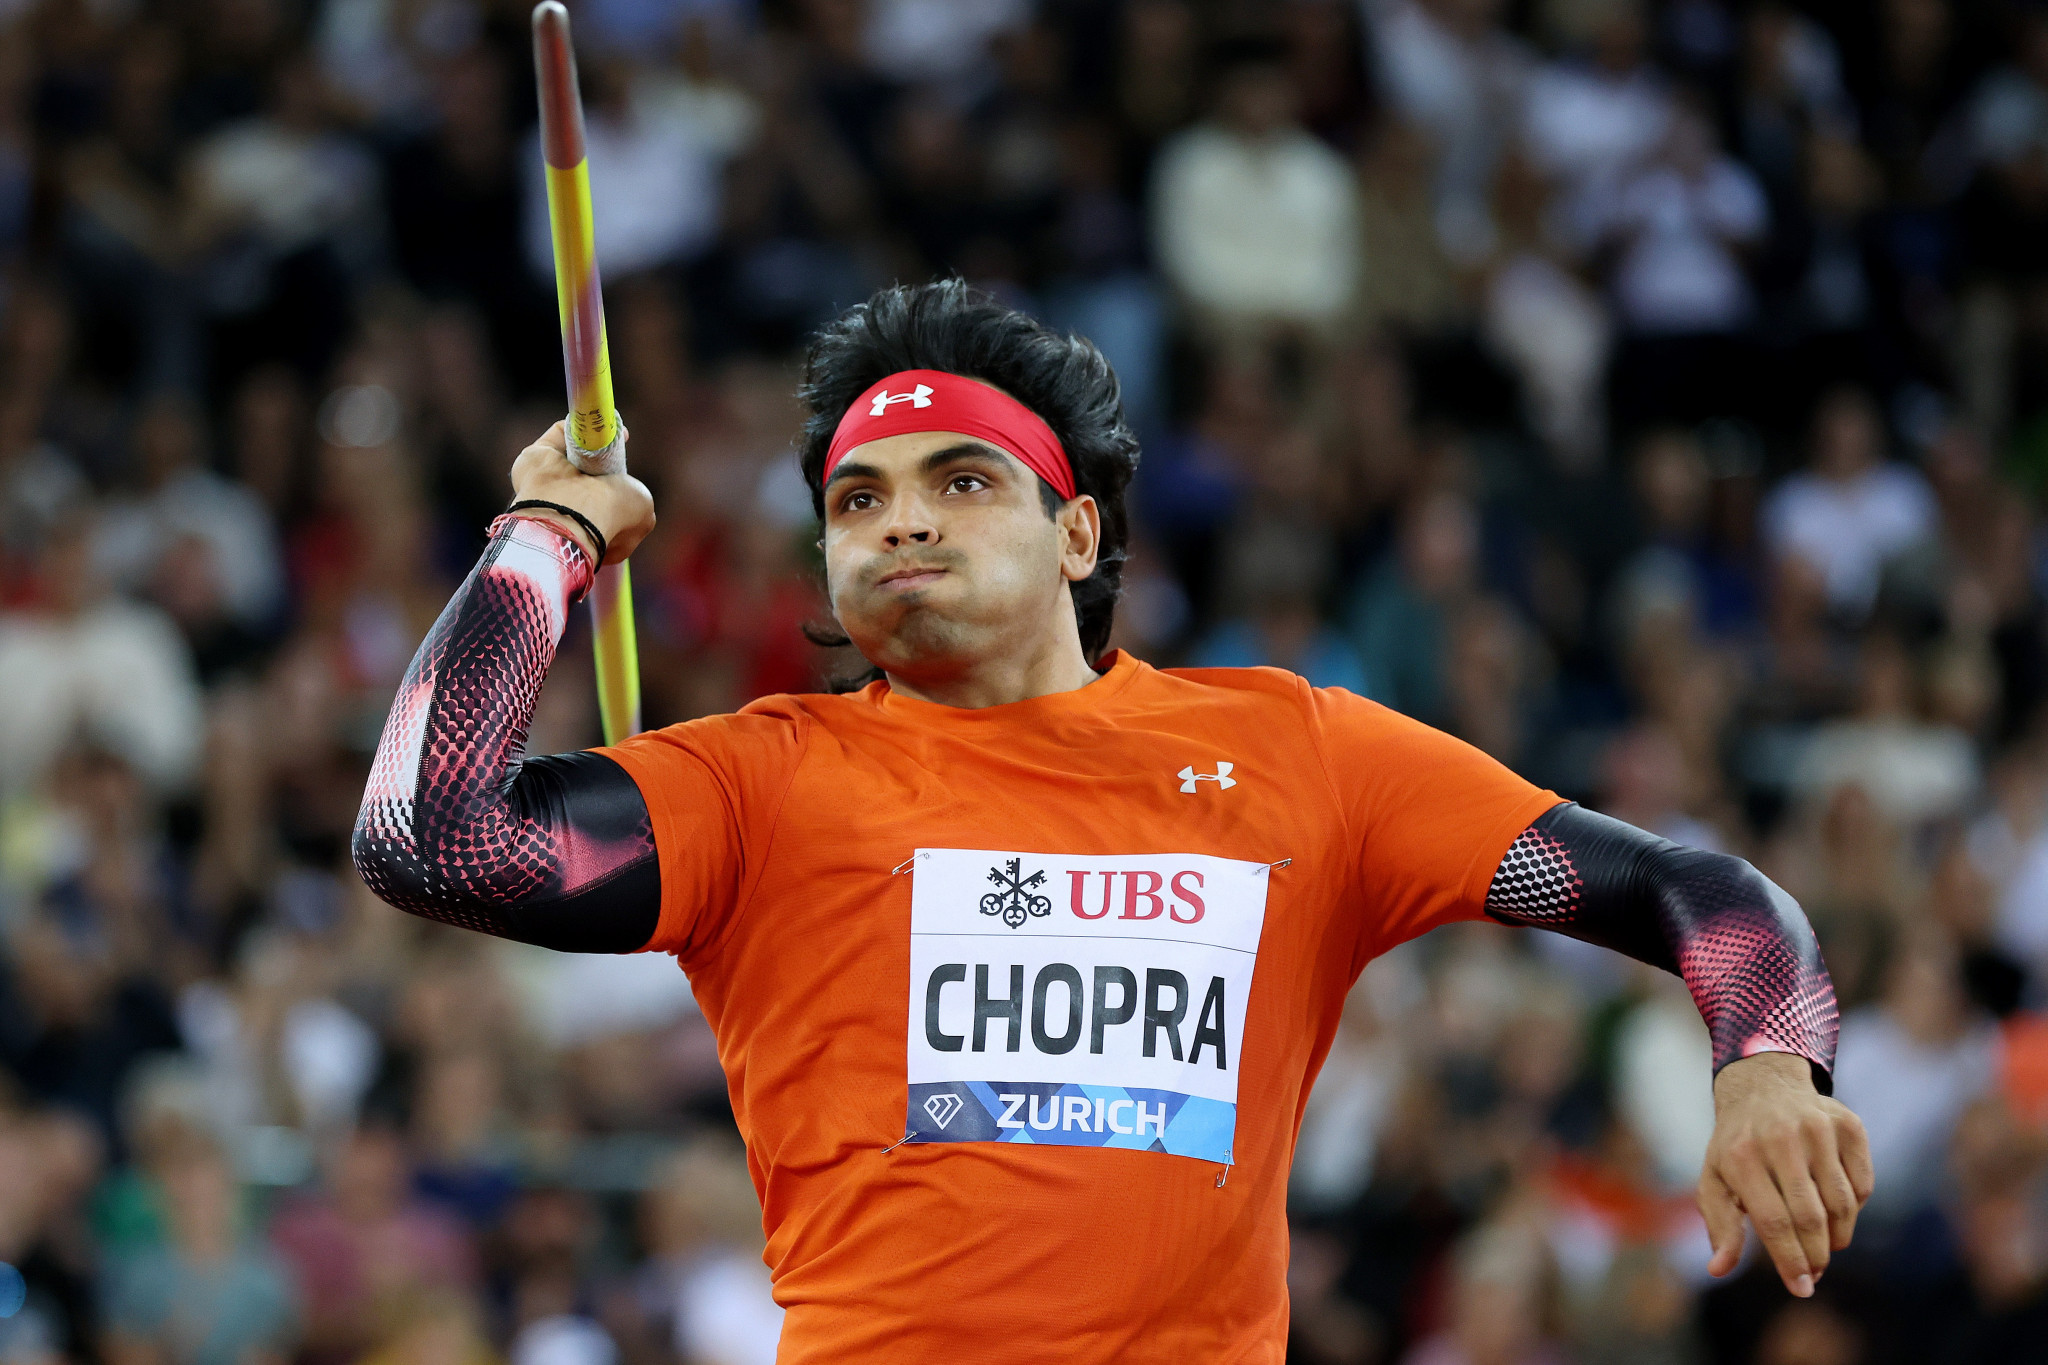 Javelin star Chopra to headline Indian team at World Athletics Championships